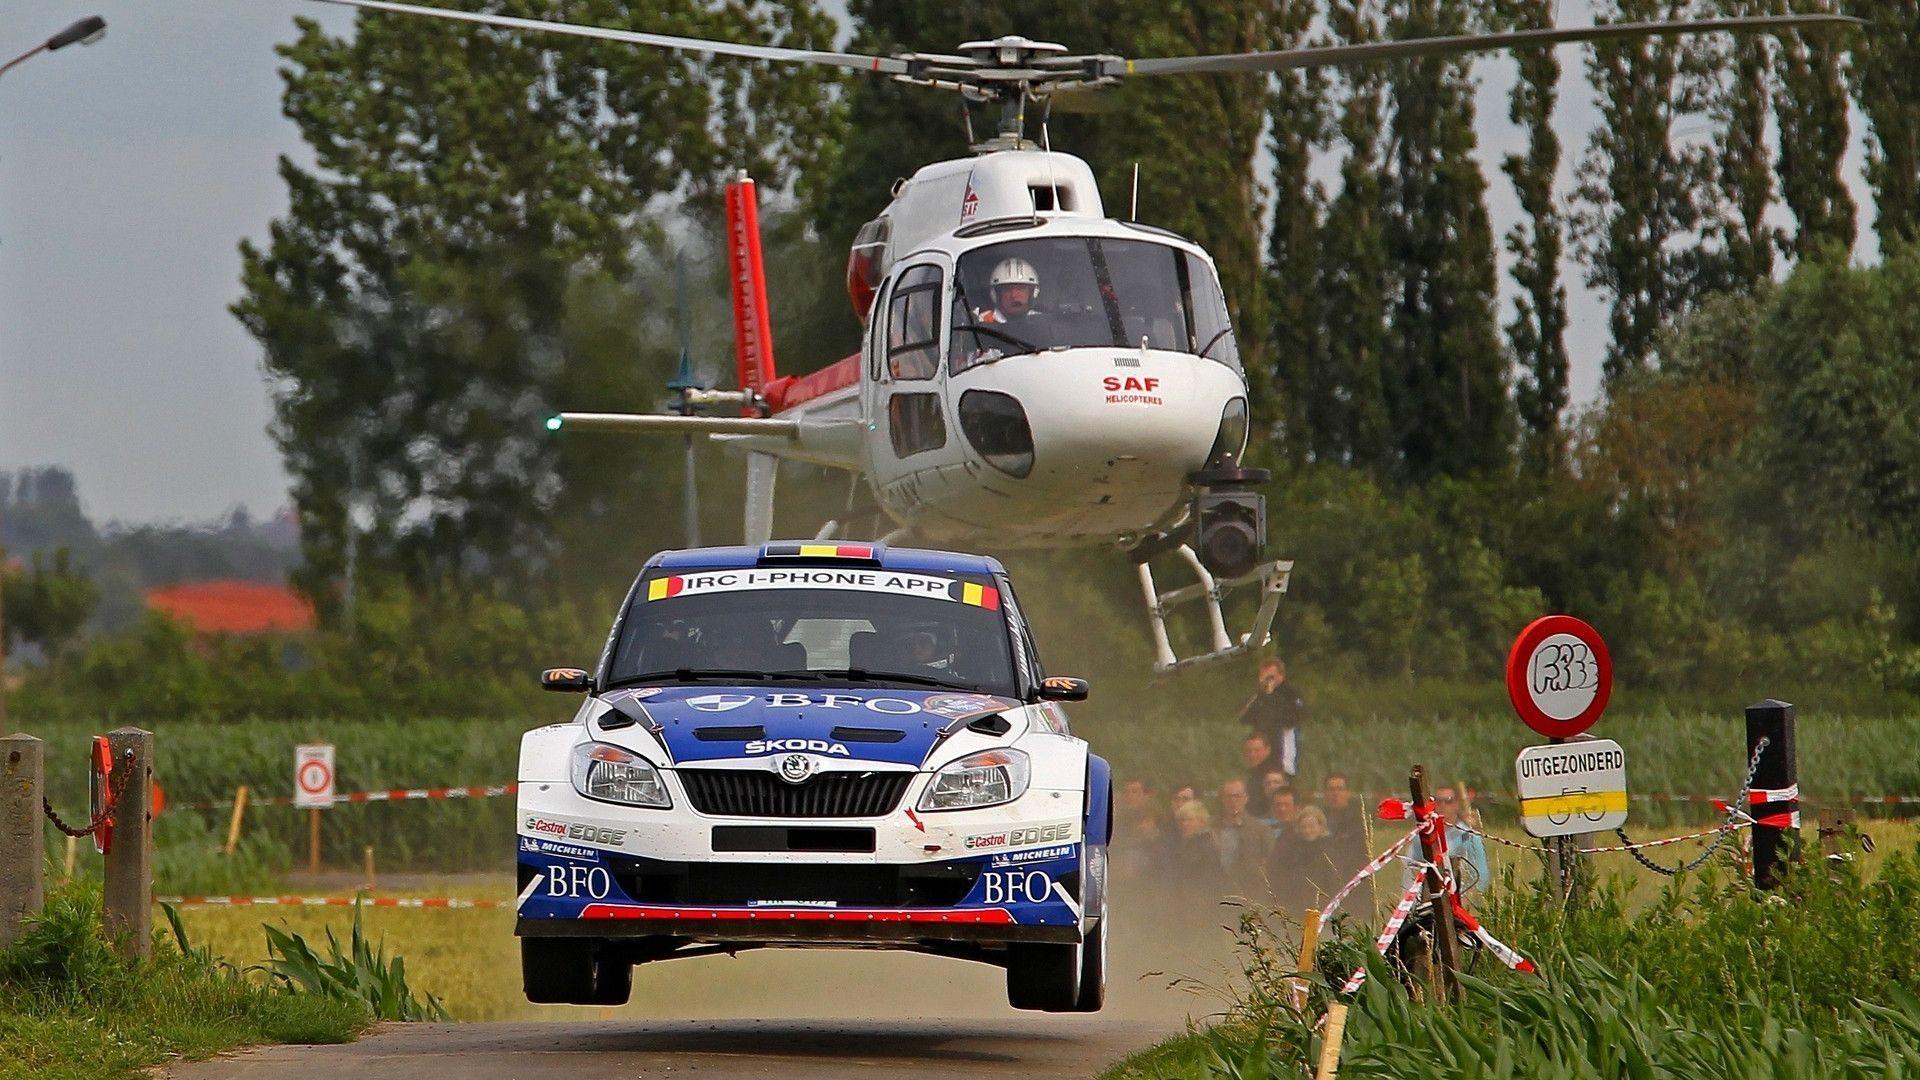 Skoda Fabia WRC racing, and helicopter wallpaper download